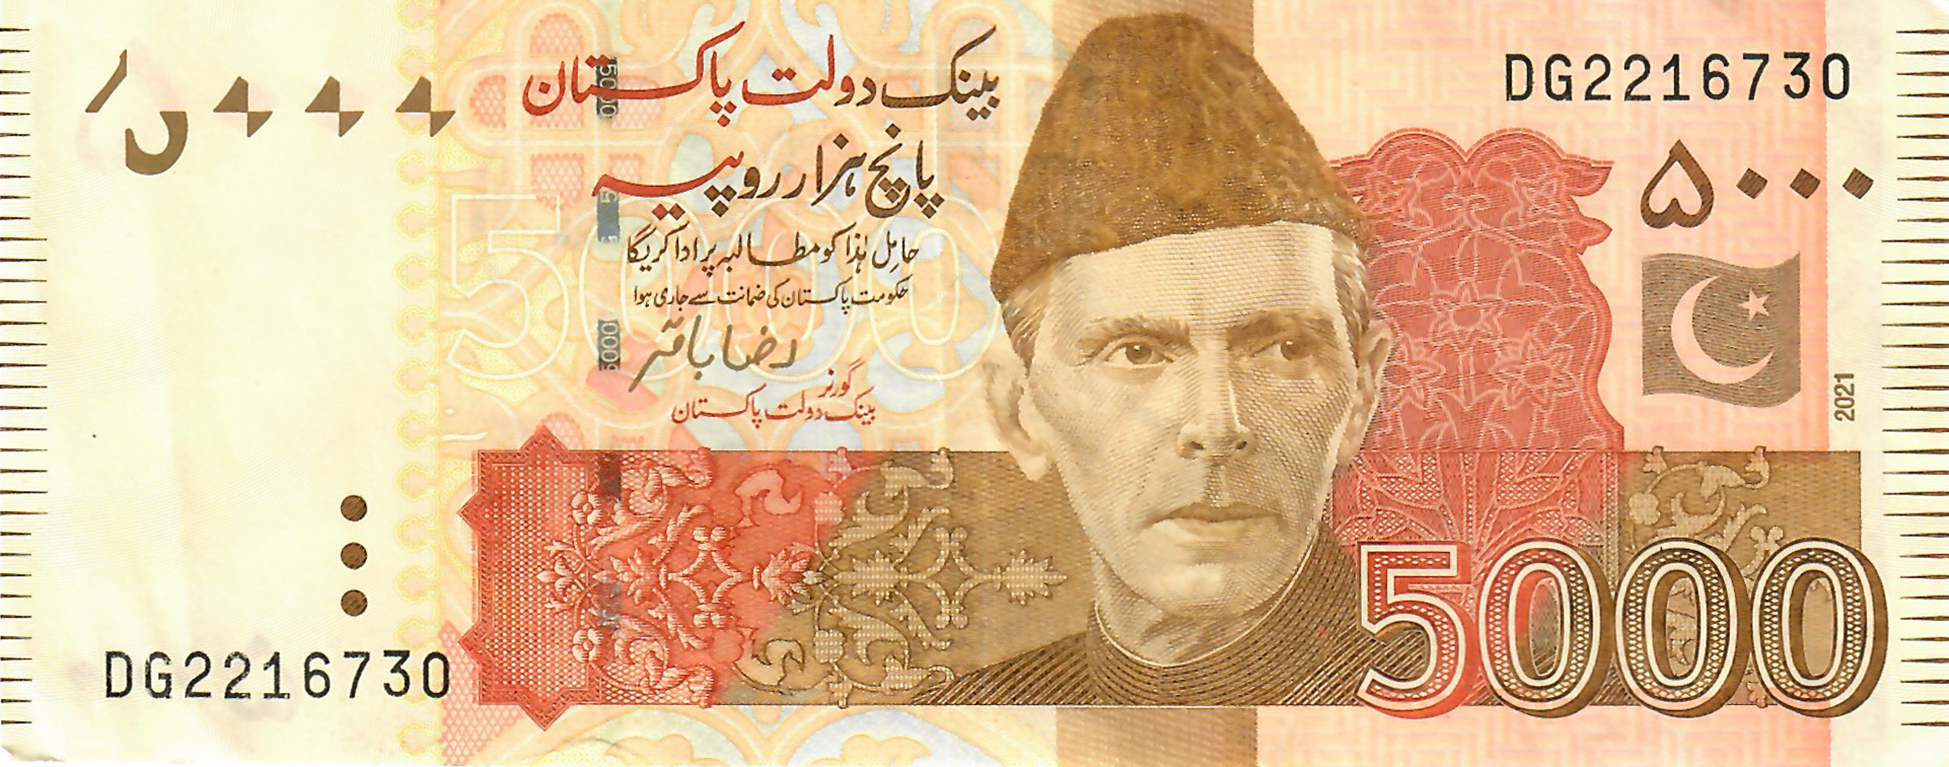 Pakistan New Date 2021 5000 Rupee Note B239p Confirmed Banknotenews